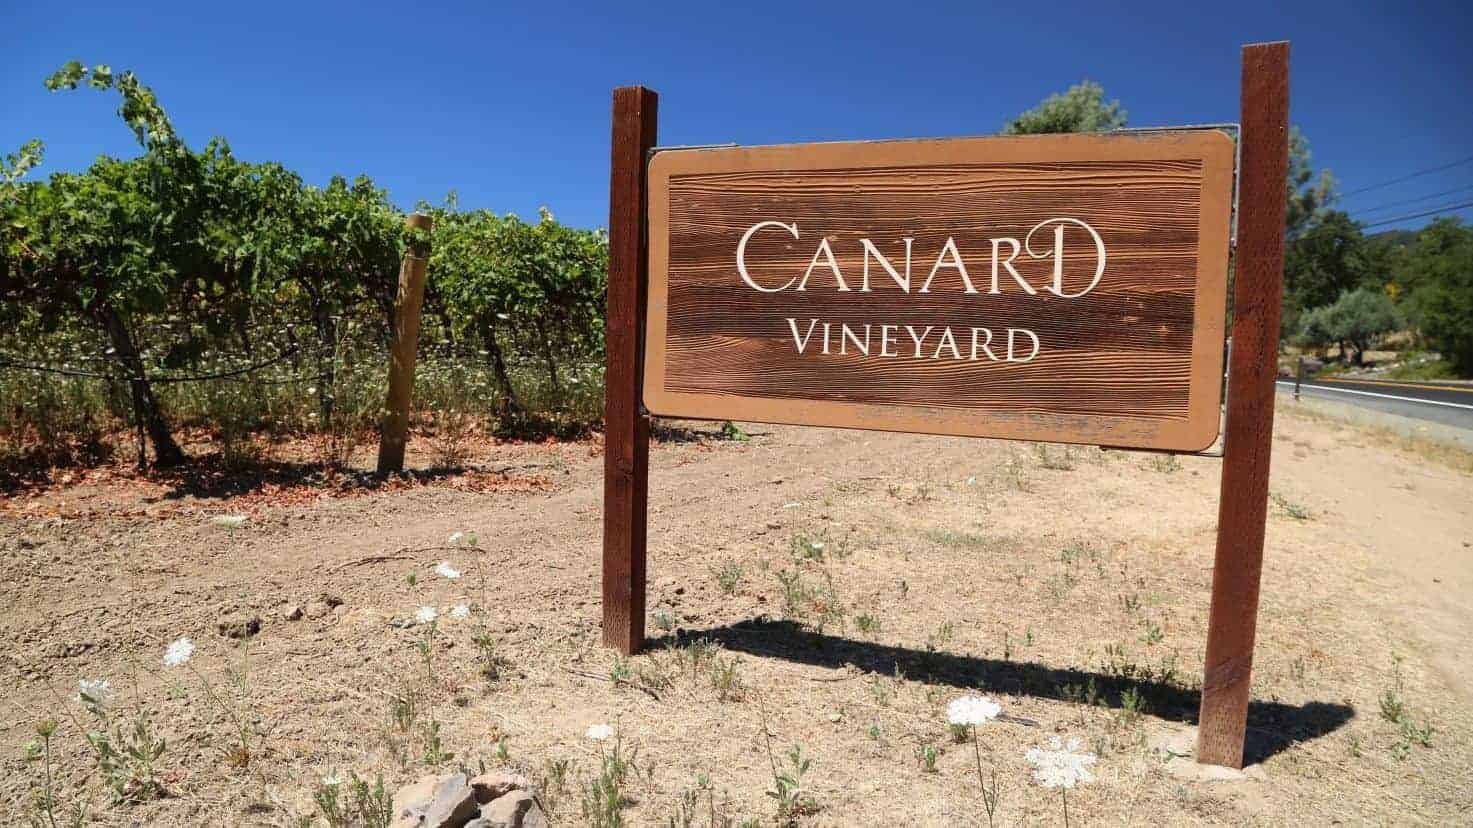 Canard Vineyard